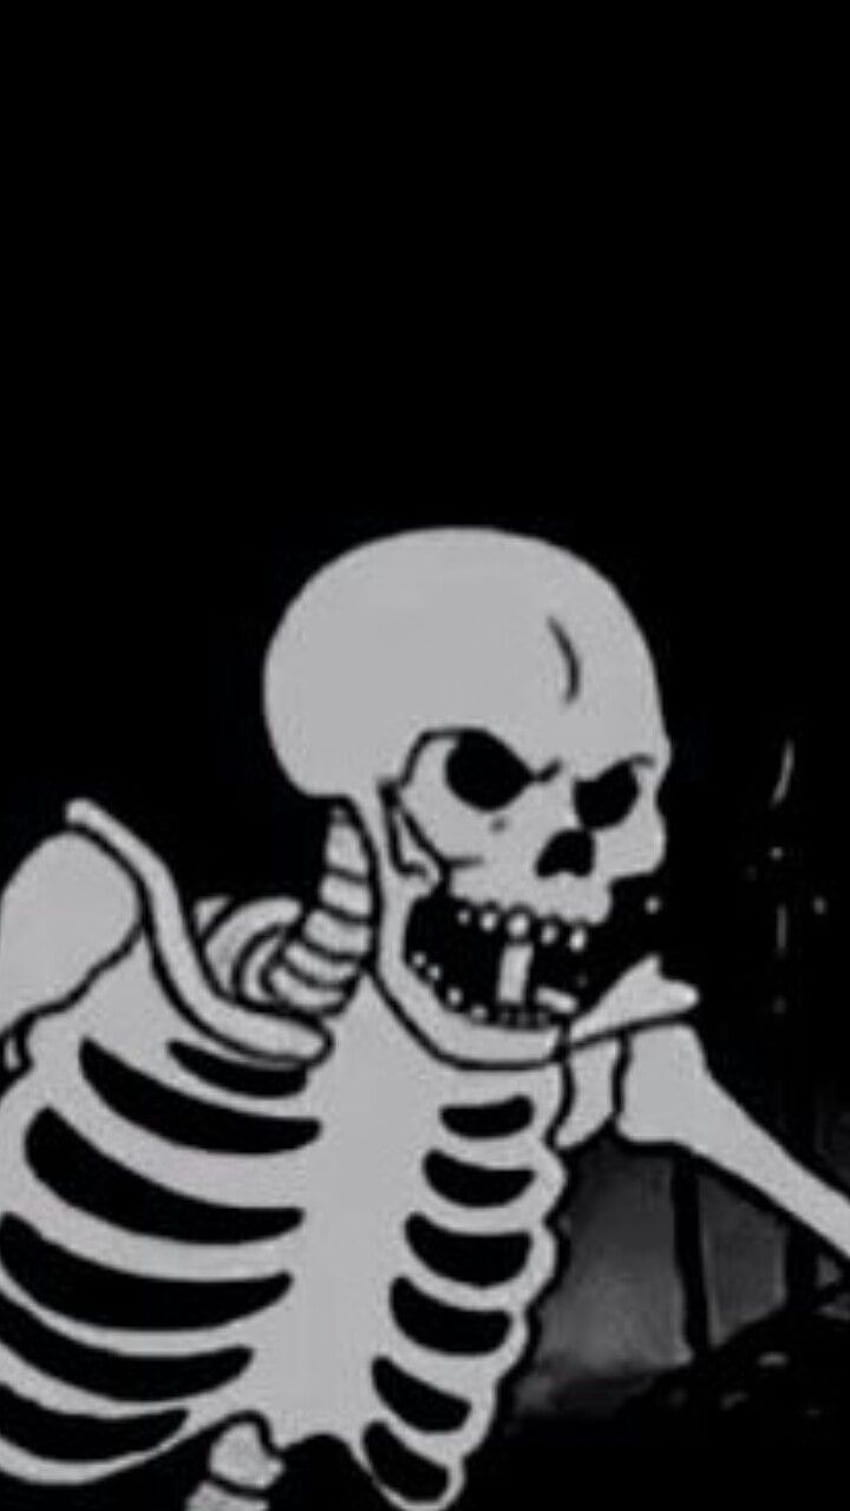 Skeleton, skeleton smoking a cigarette, skeleton smoking, skeleton smoking cigarette, skeleton with cigarette, skeleton with a cigarette, skeleton smoking a cigarette in a dark room - Creepy, skeleton, horror